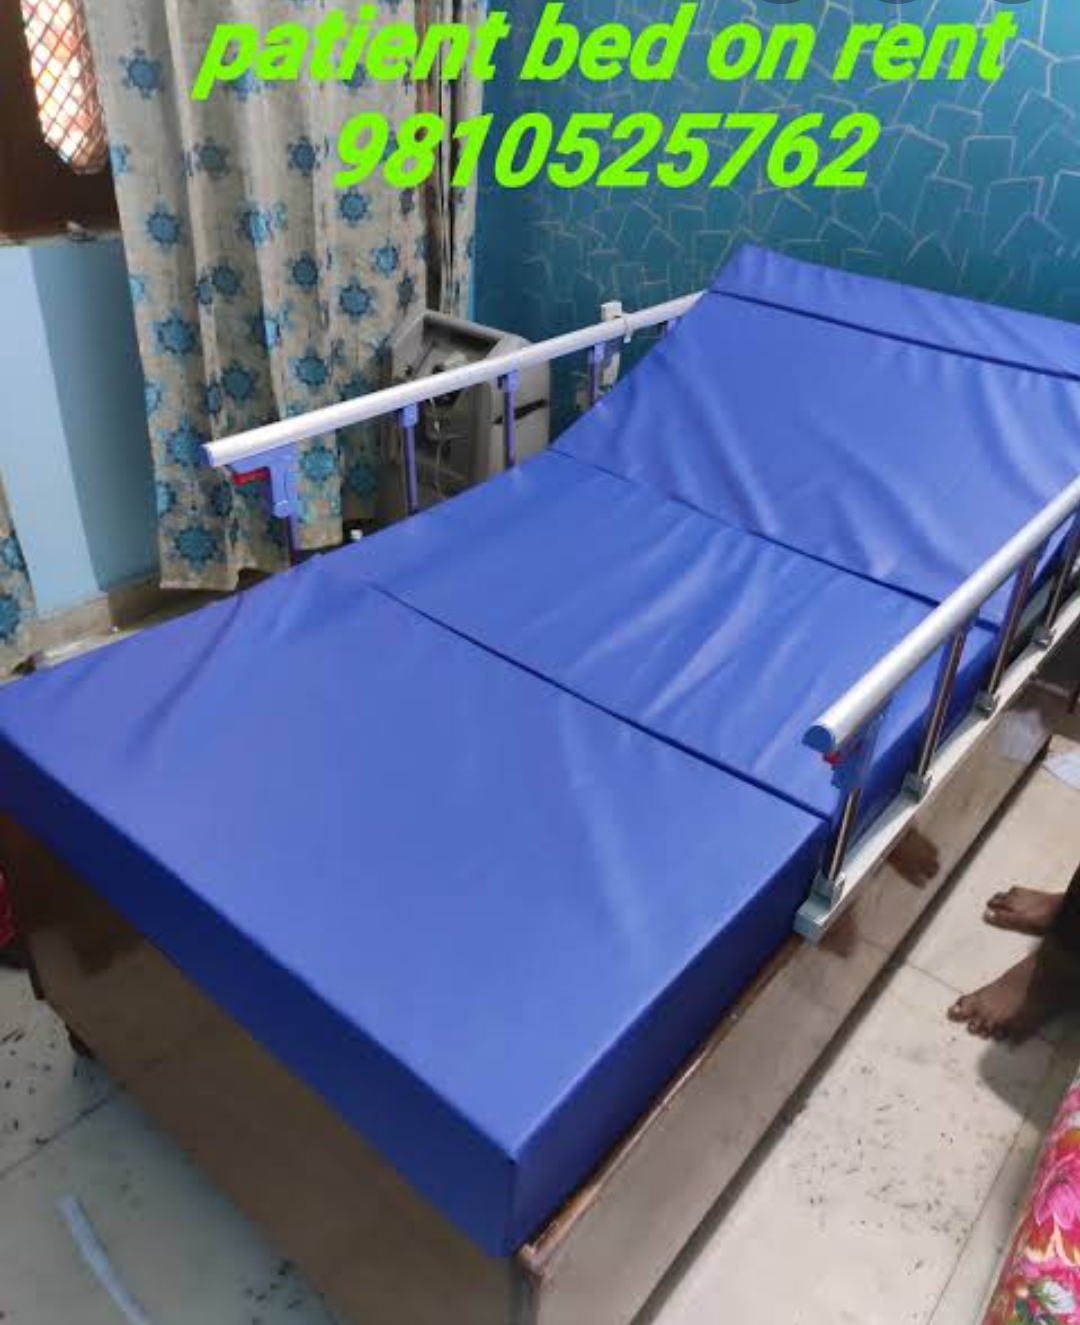 Buy/Rent Hospital Bed in Delhi 8178463439